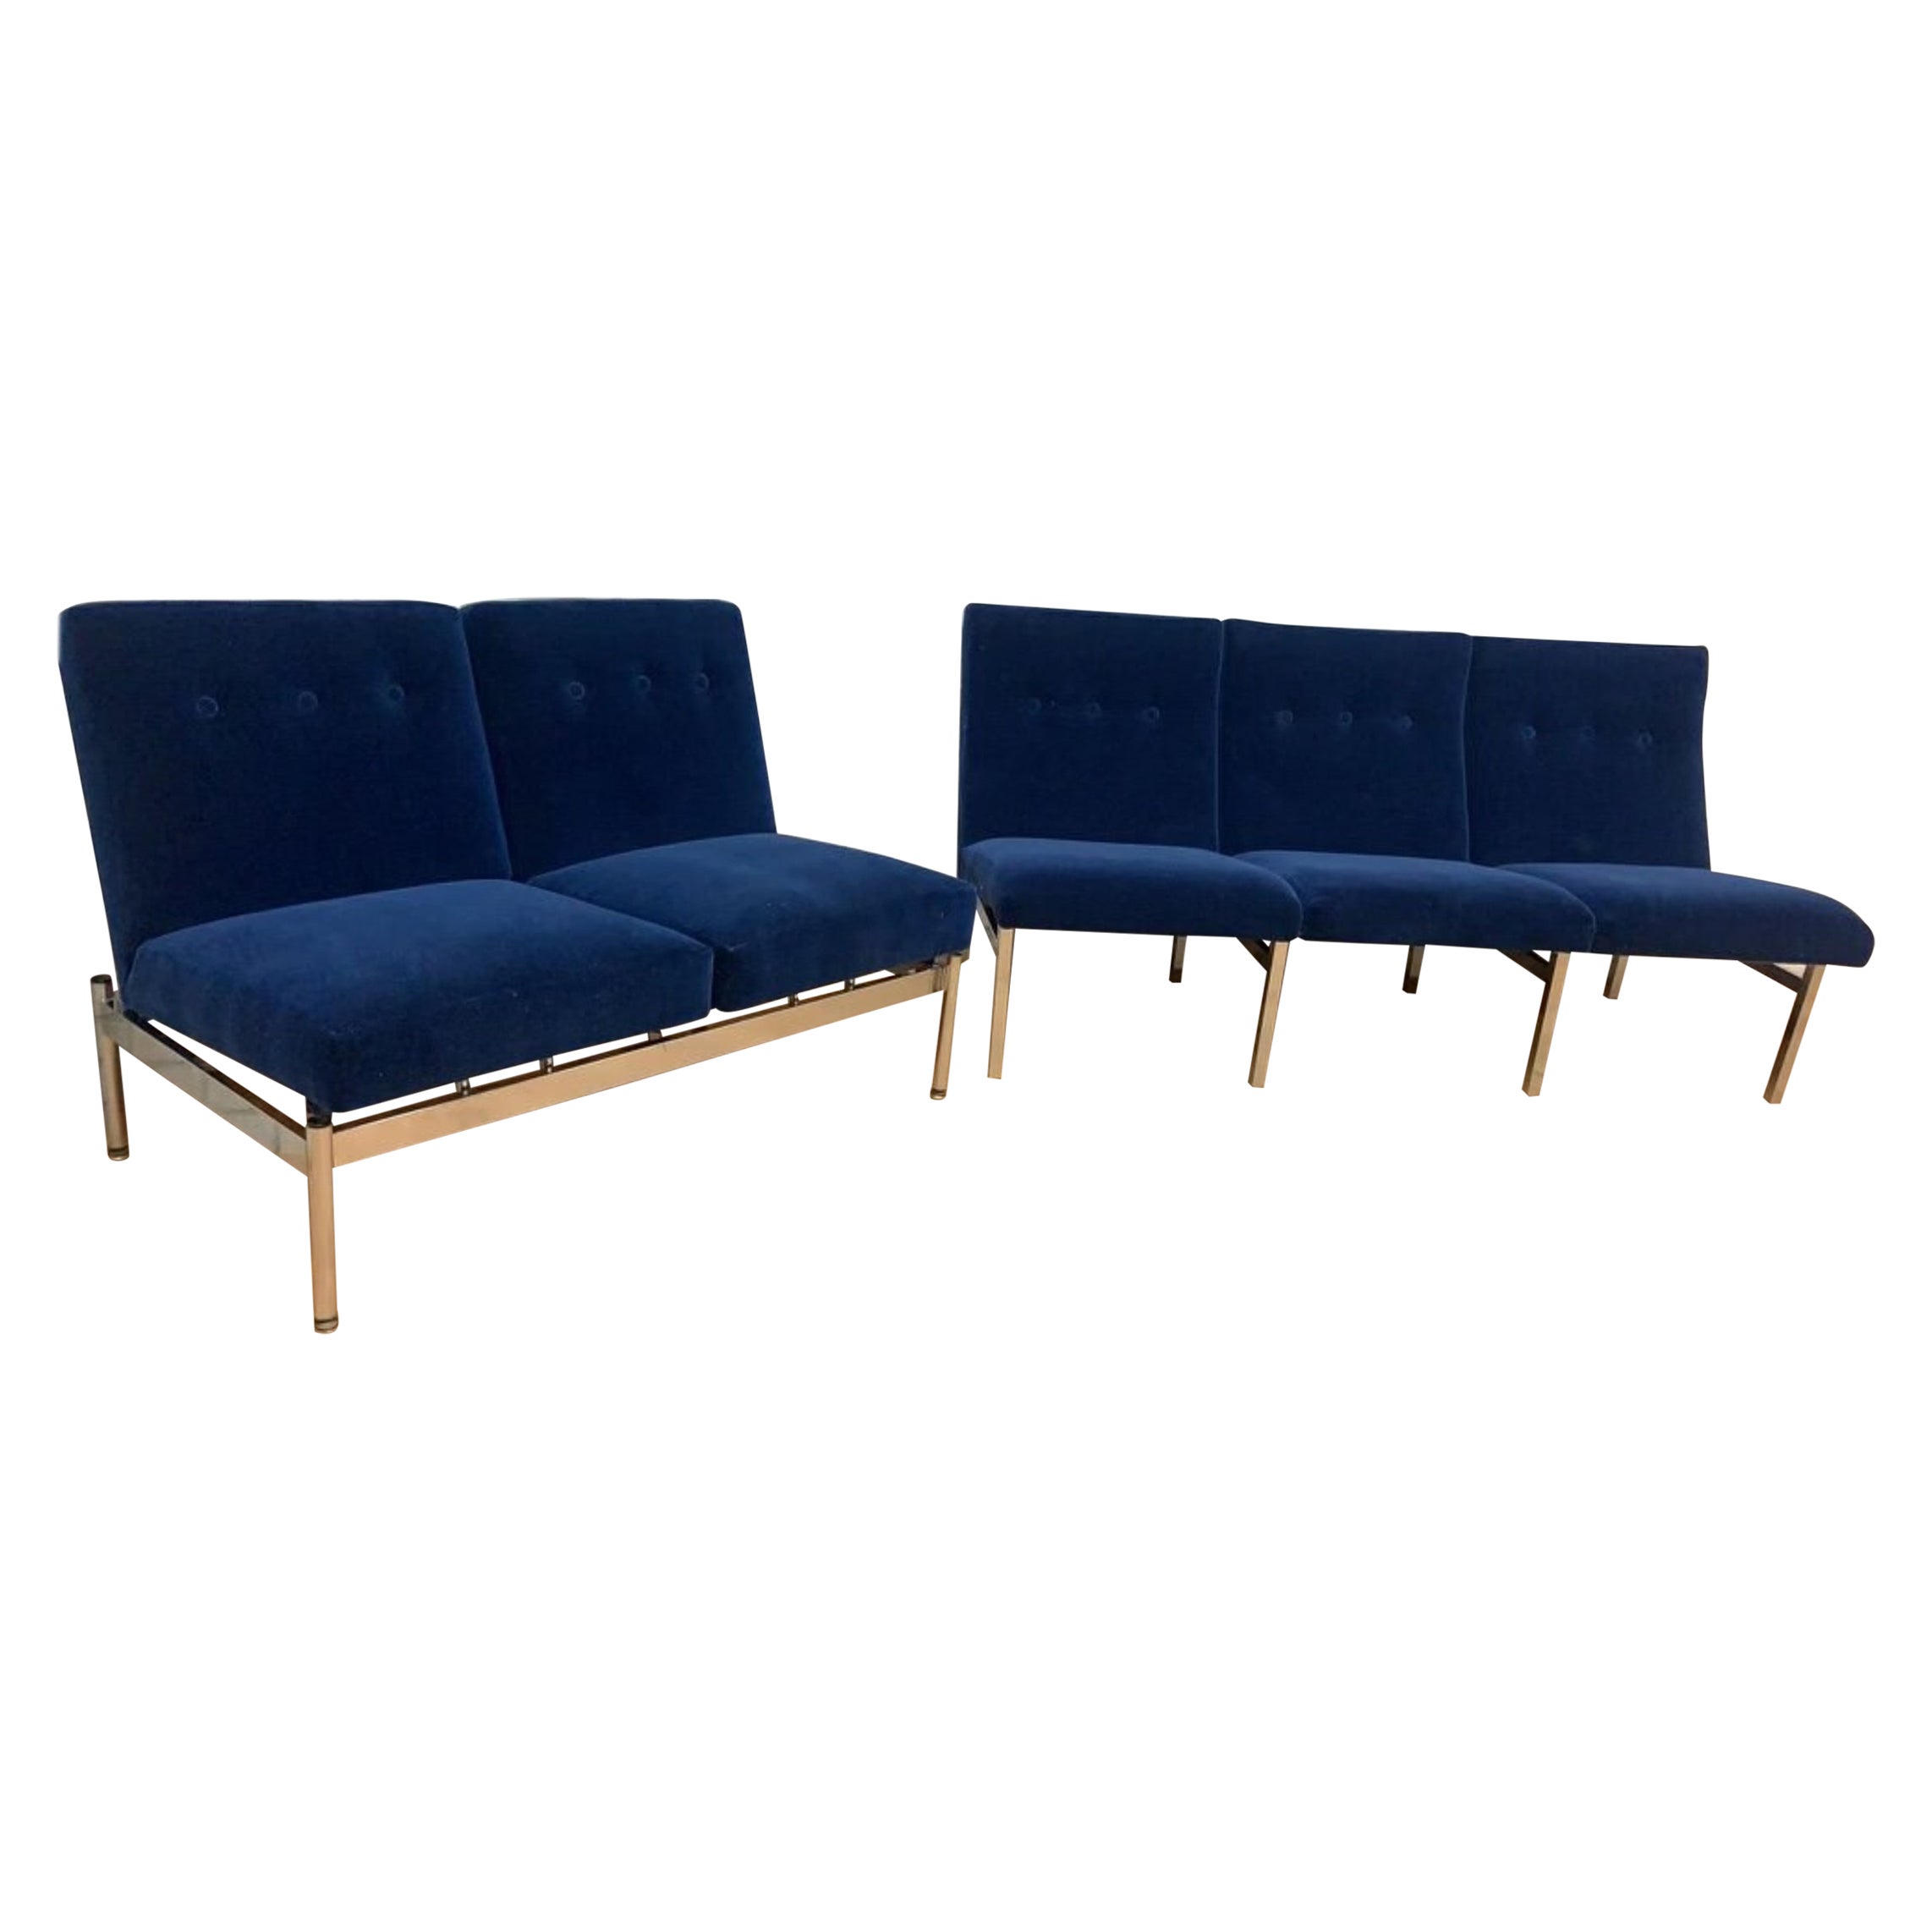 MCM Steelcase 3 Seat & 2 Seat Sofa Set Upholstered in “Cobalt Blue” - Set of 2